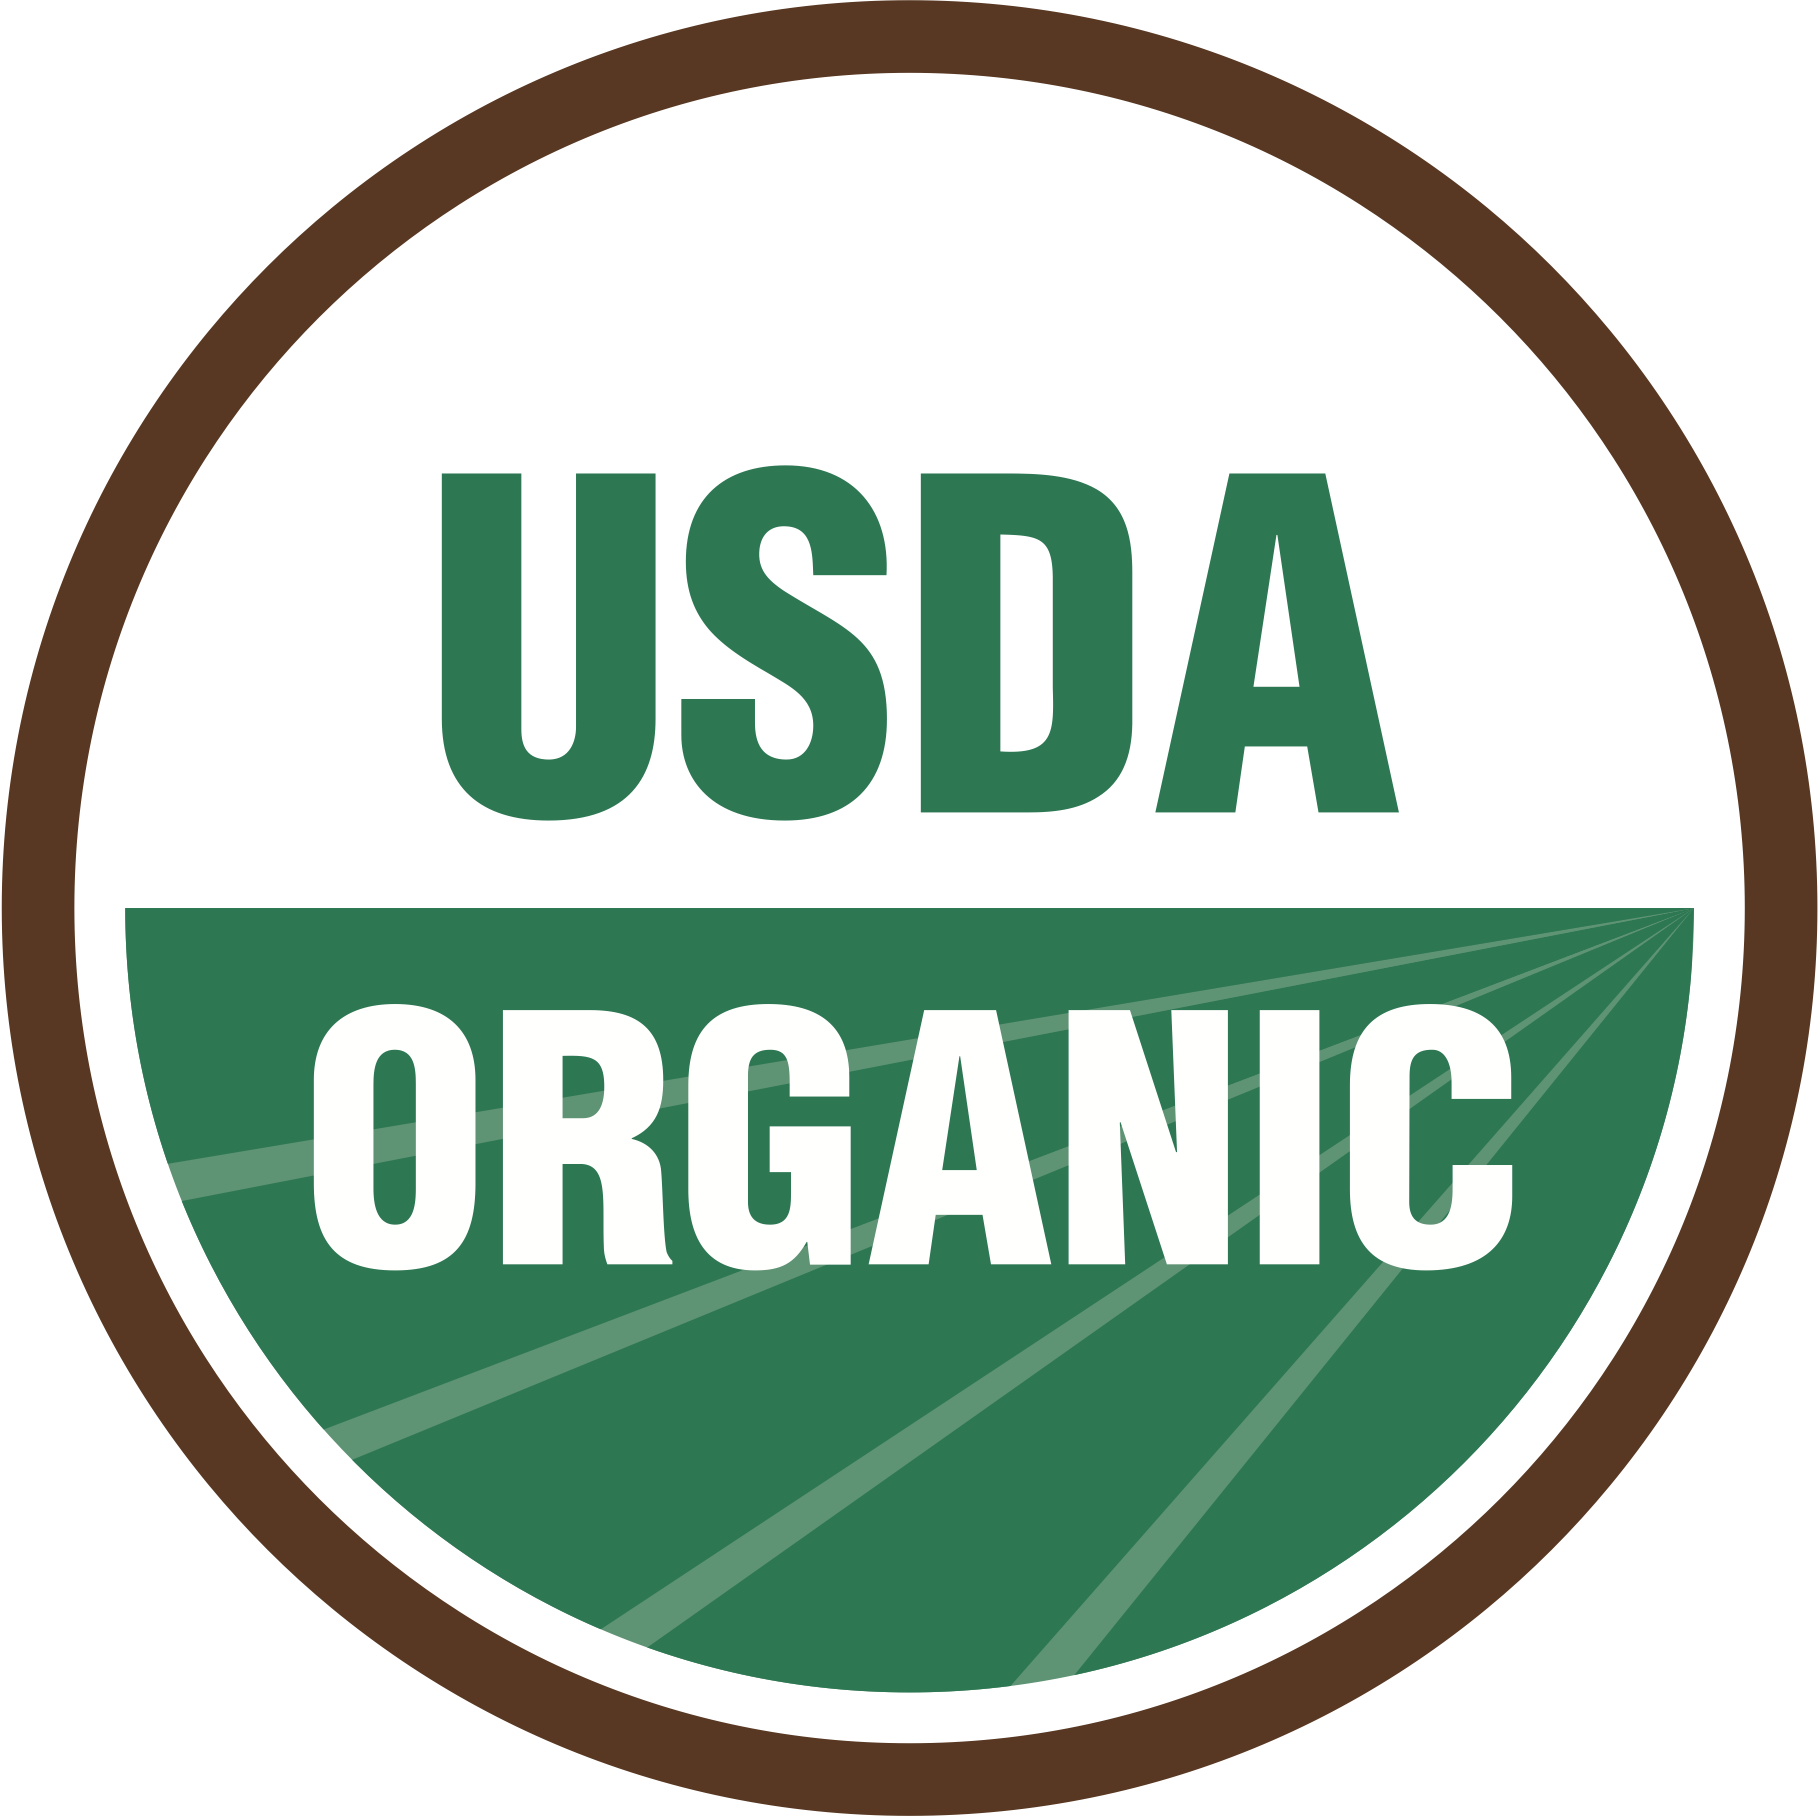 Organic Certification Through MOSA